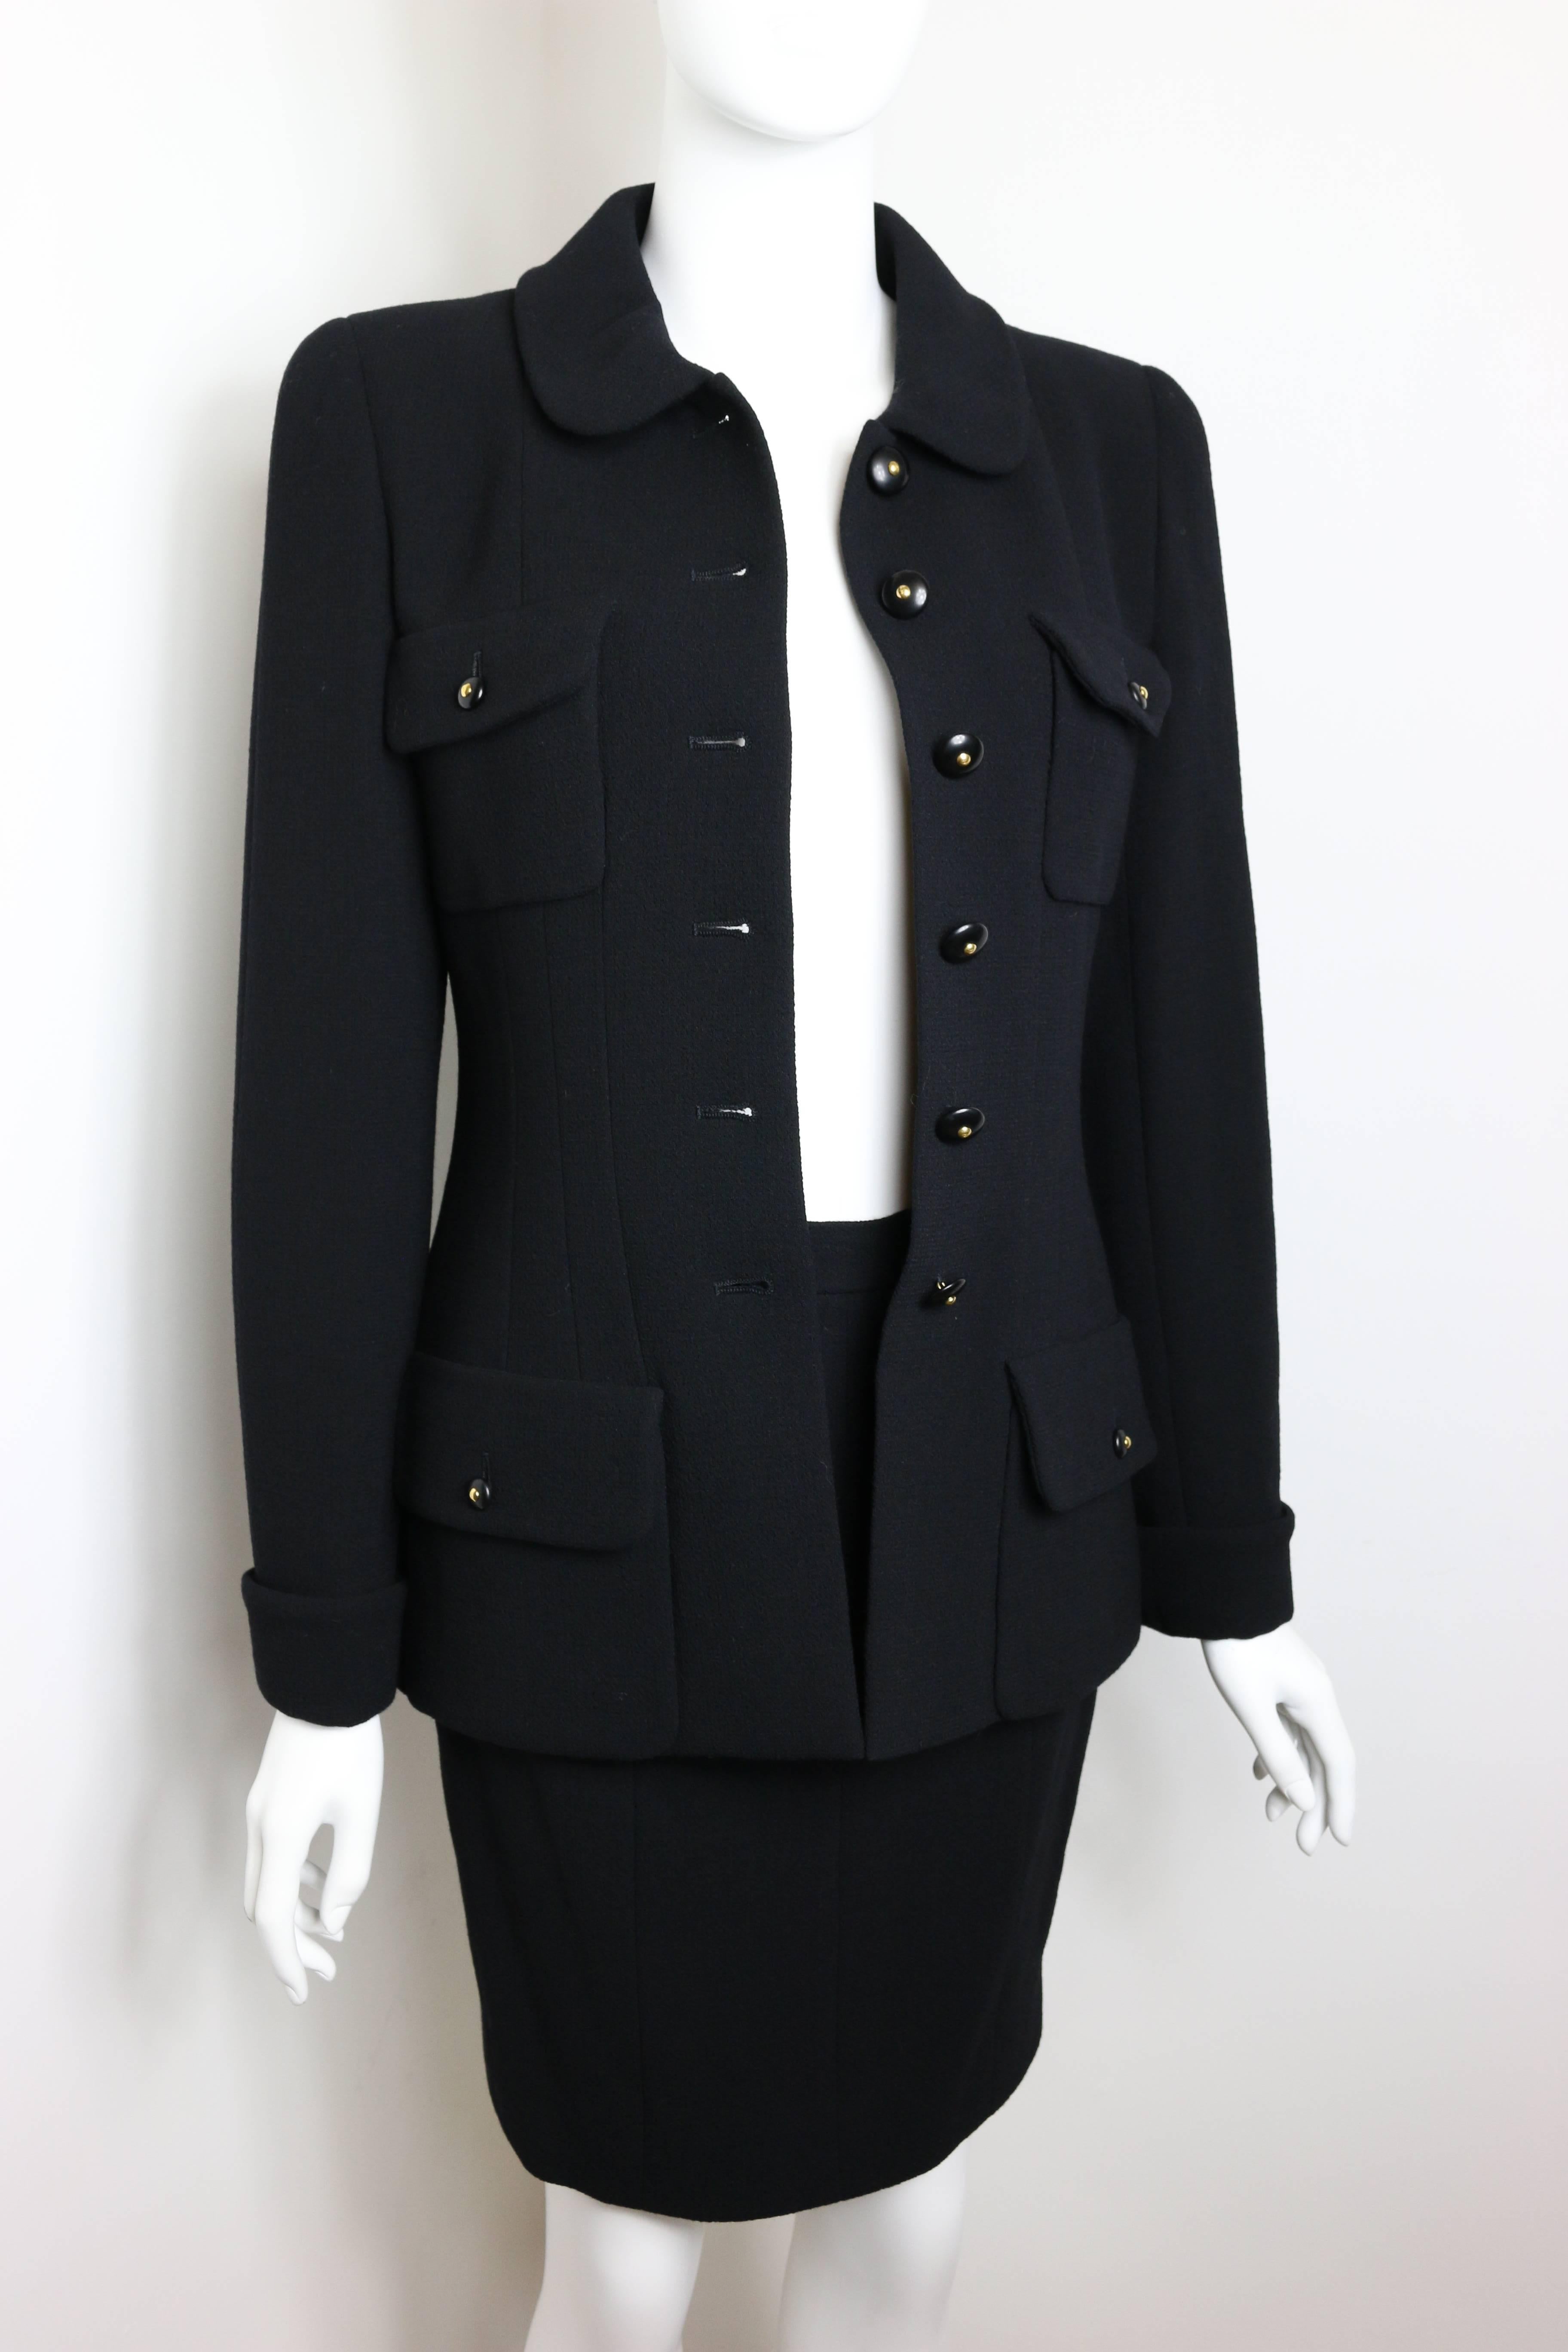 Chanel Black Wool Suit 4